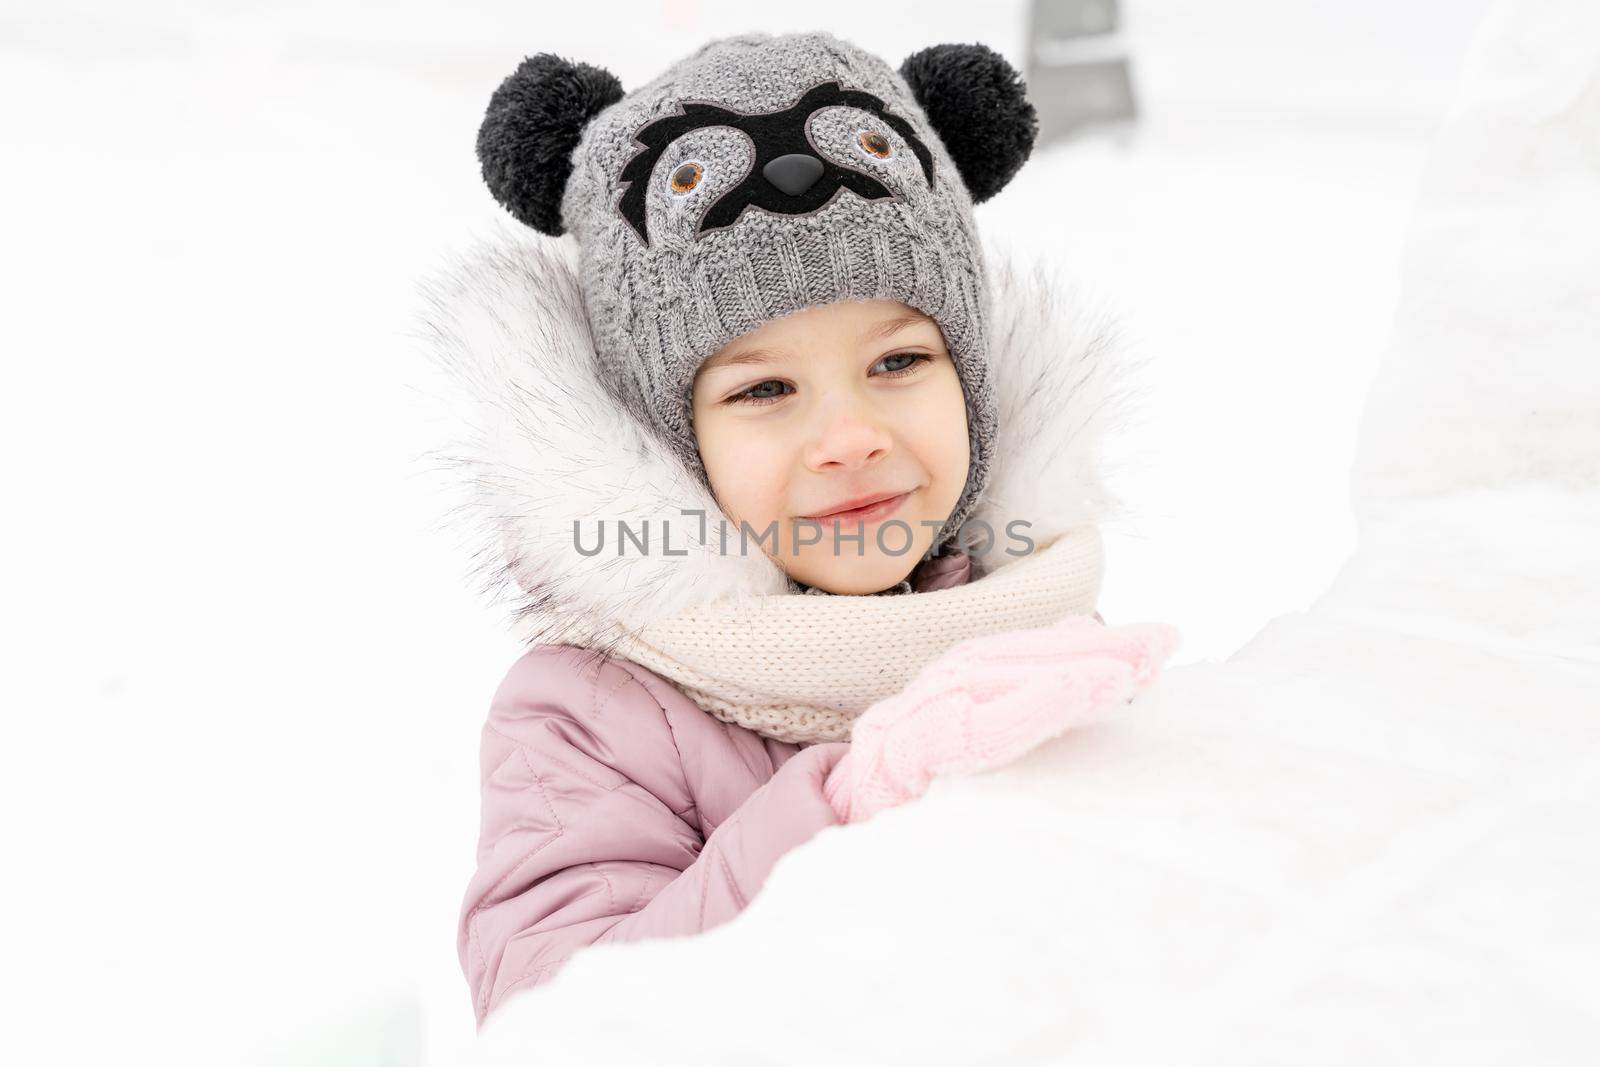 portrait of a cute baby girl in a snowy town by Lena_Ogurtsova